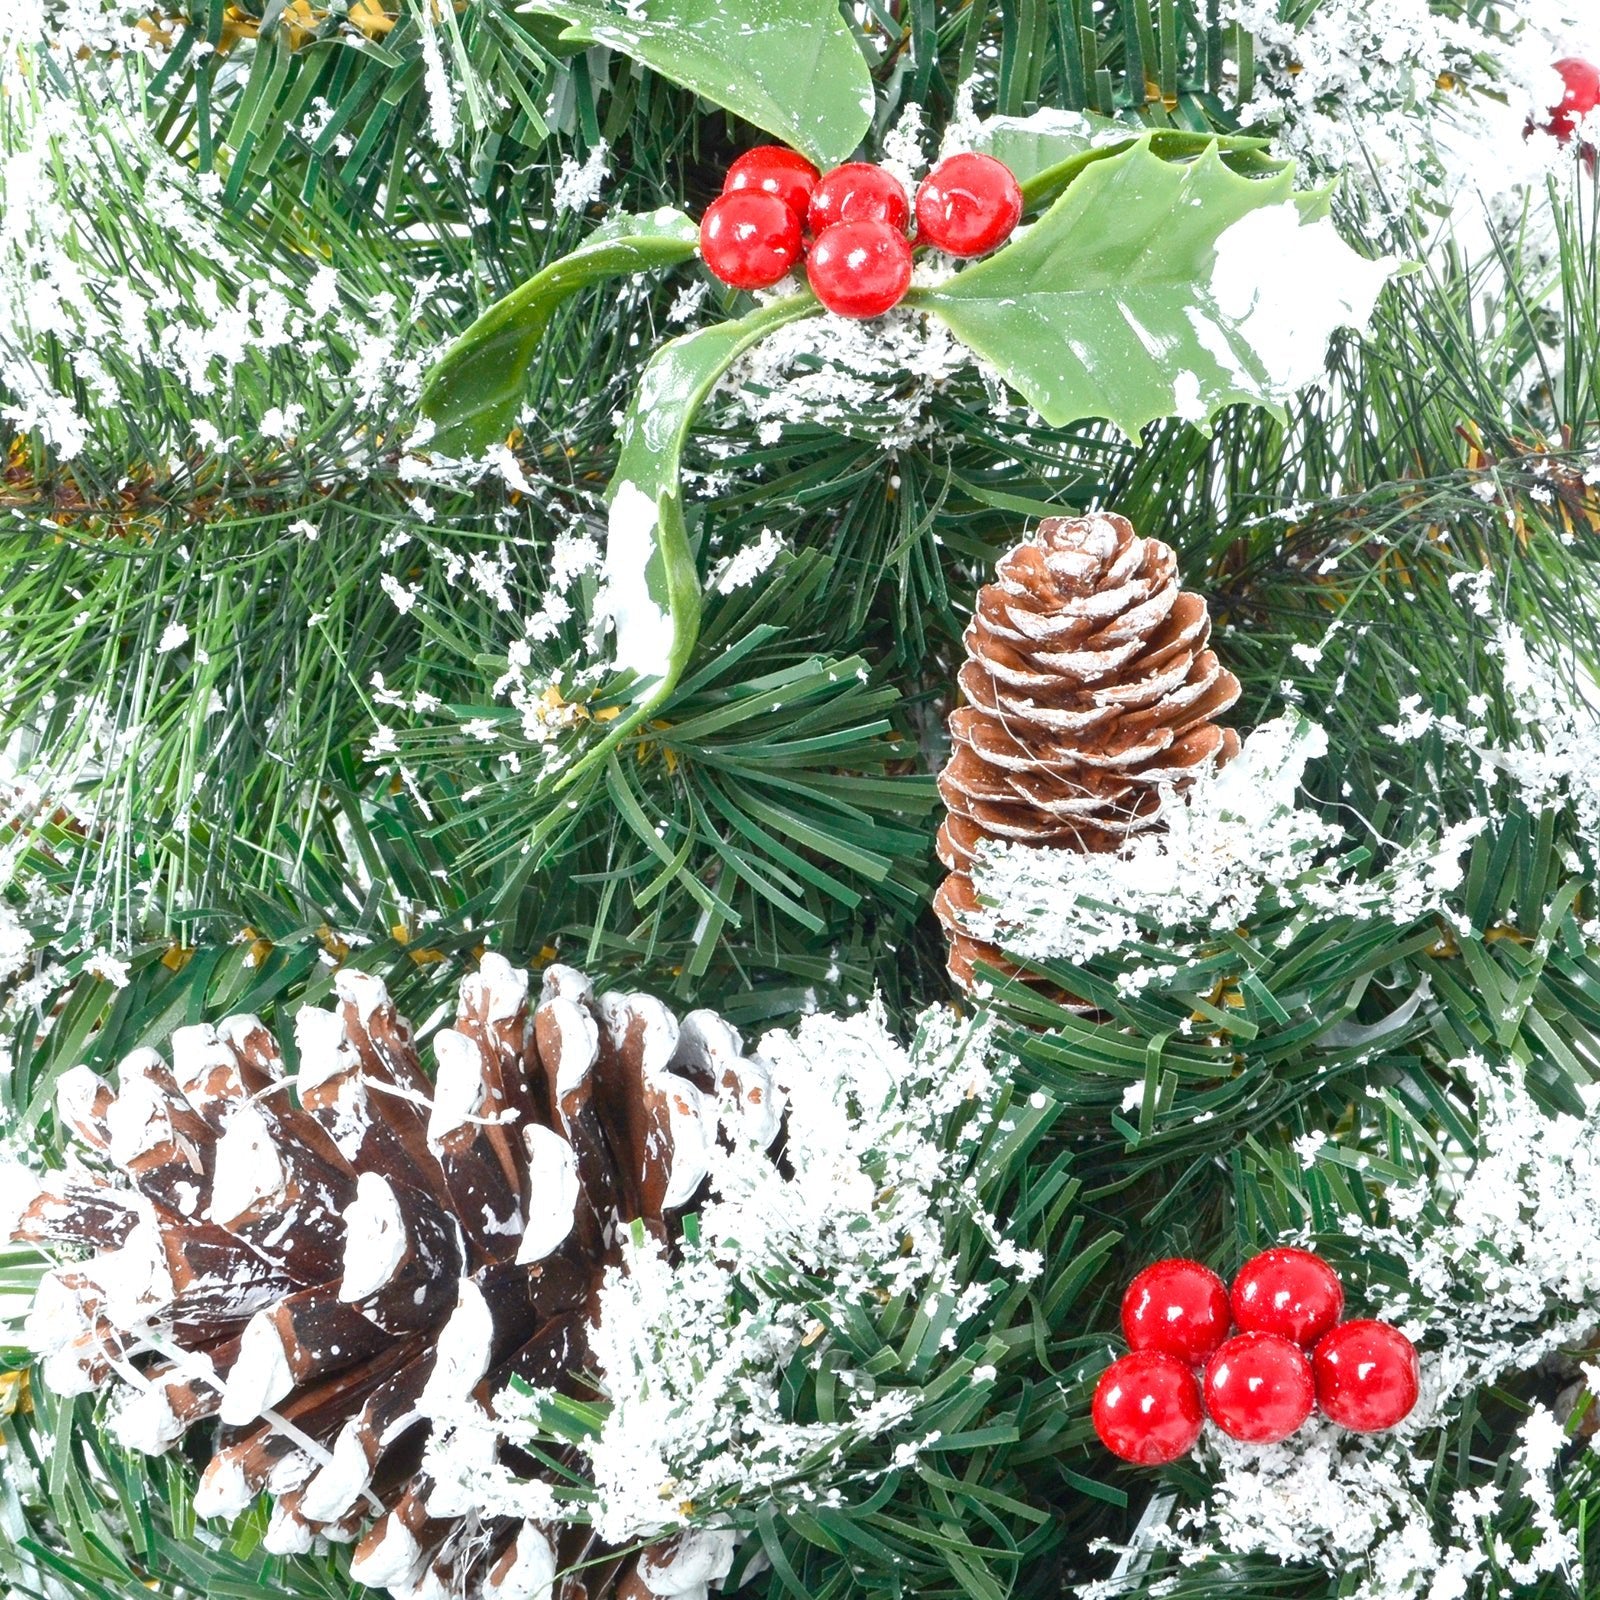 Mr Crimbo 2ft Mini Snowy Christmas Tree With Holly Berries - MrCrimbo.co.uk -XS4459 - -christmas tree